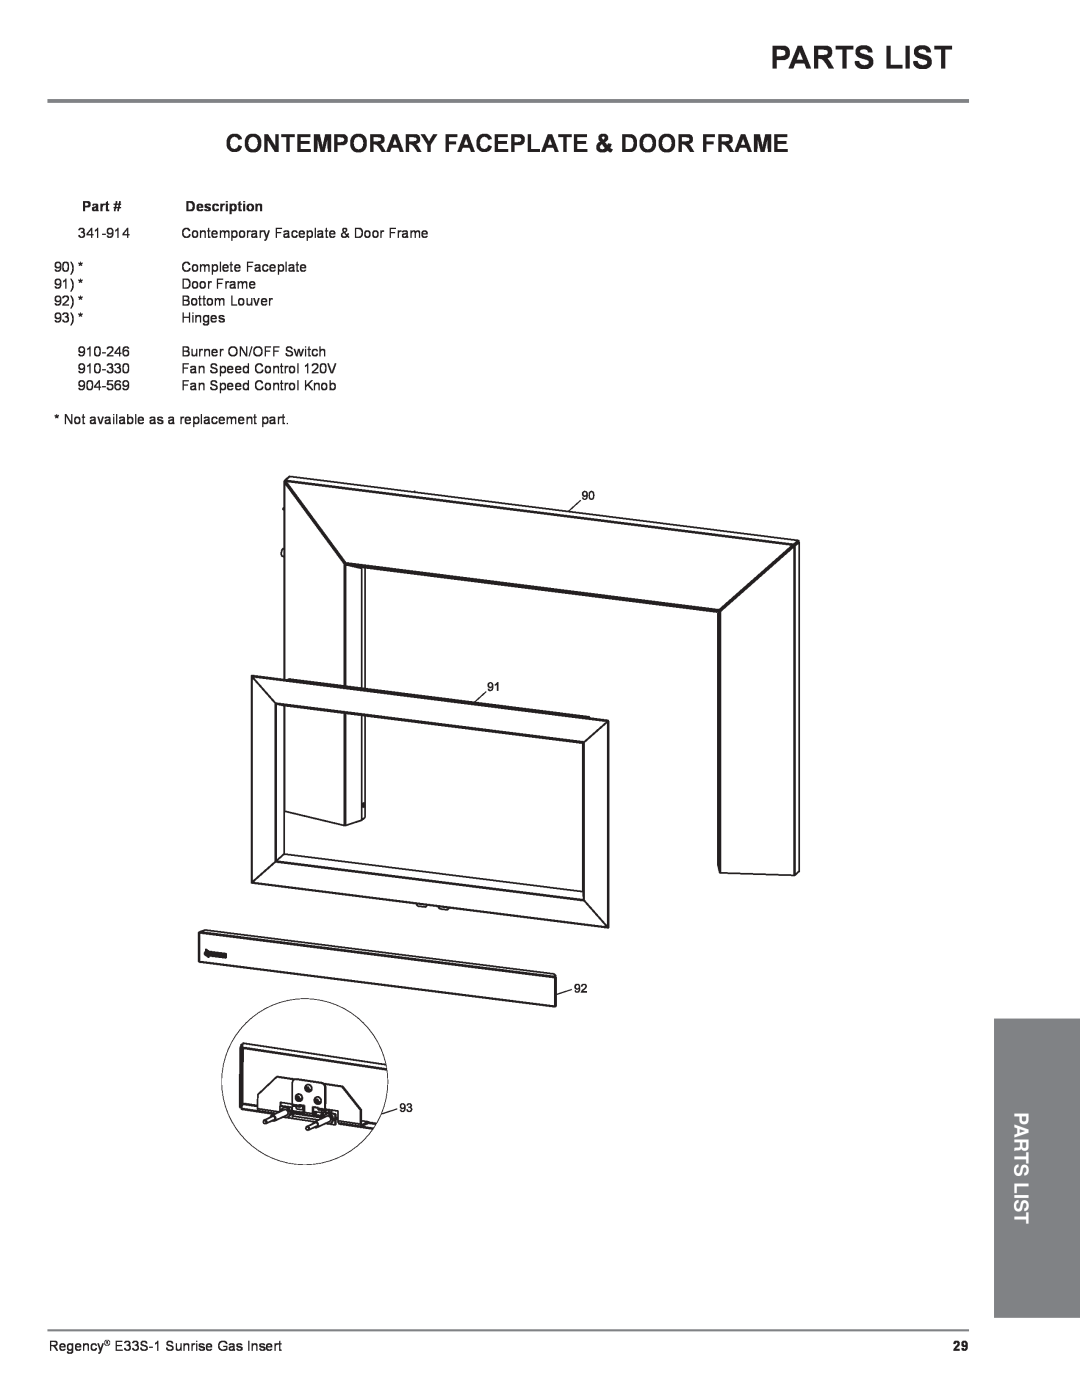 Regency E33S installation manual Parts List, Contemporary Faceplate & Door Frame 